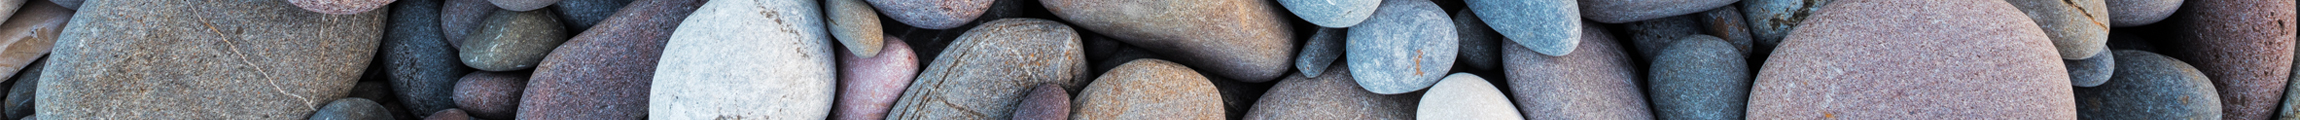 multi-colored stones on a beach